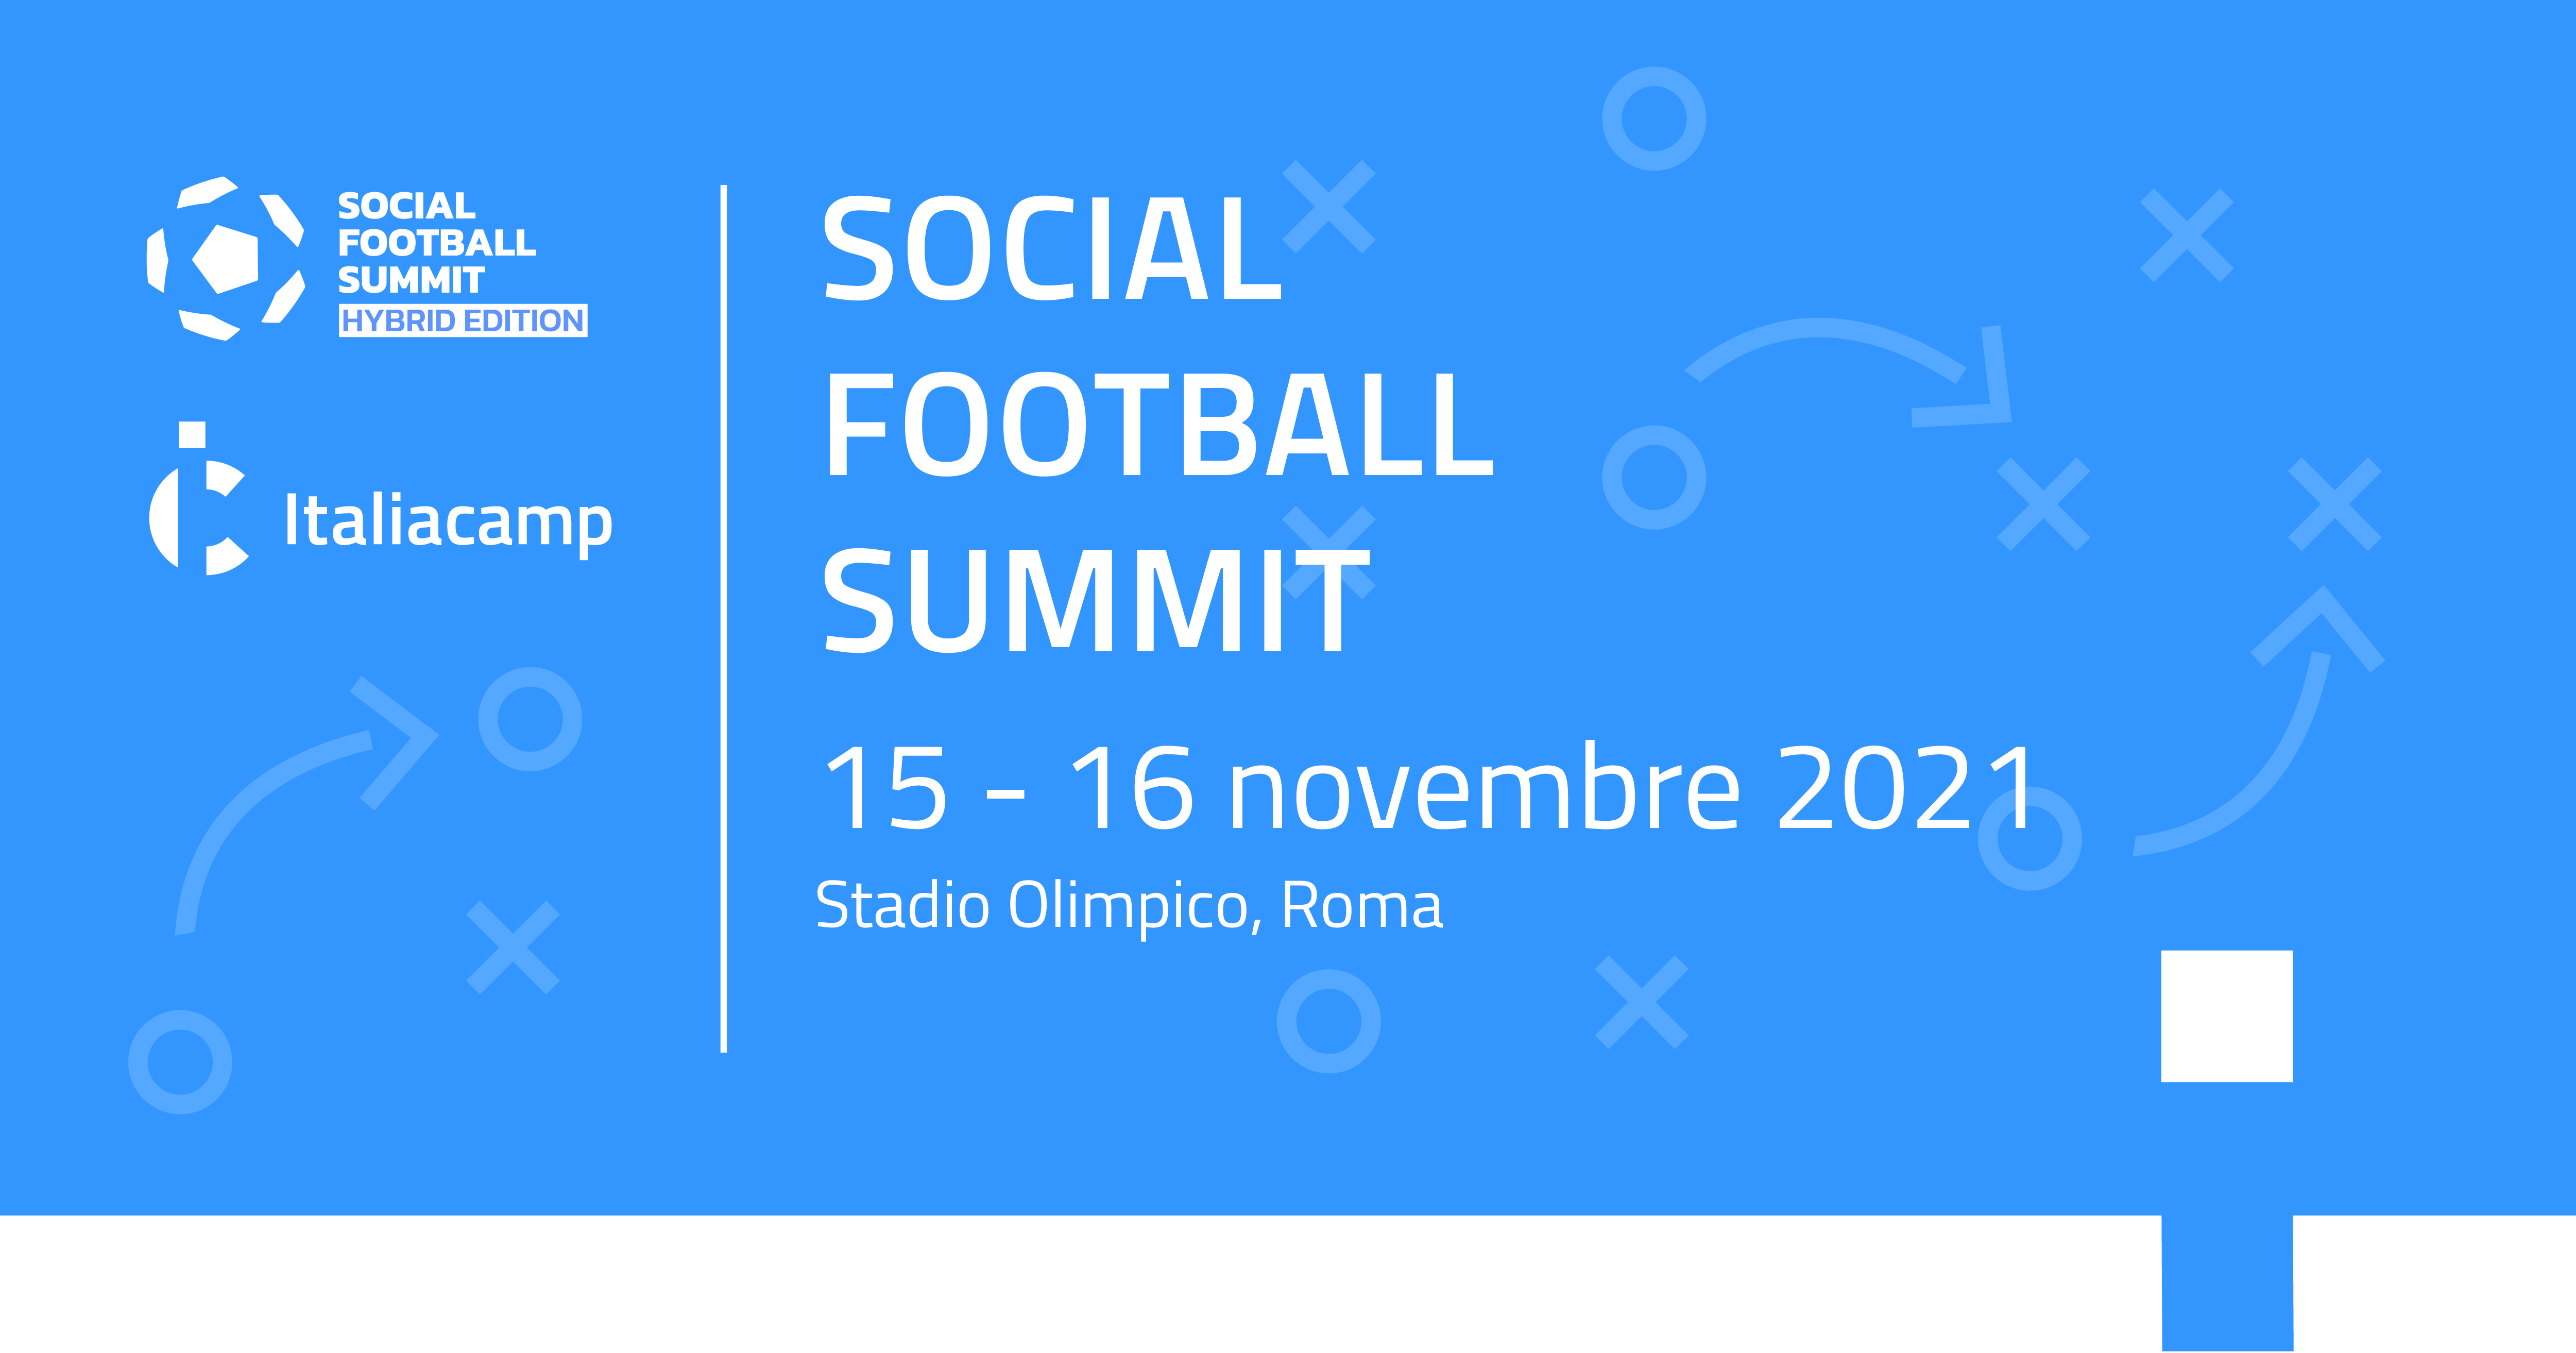 Italiacamp social football summit